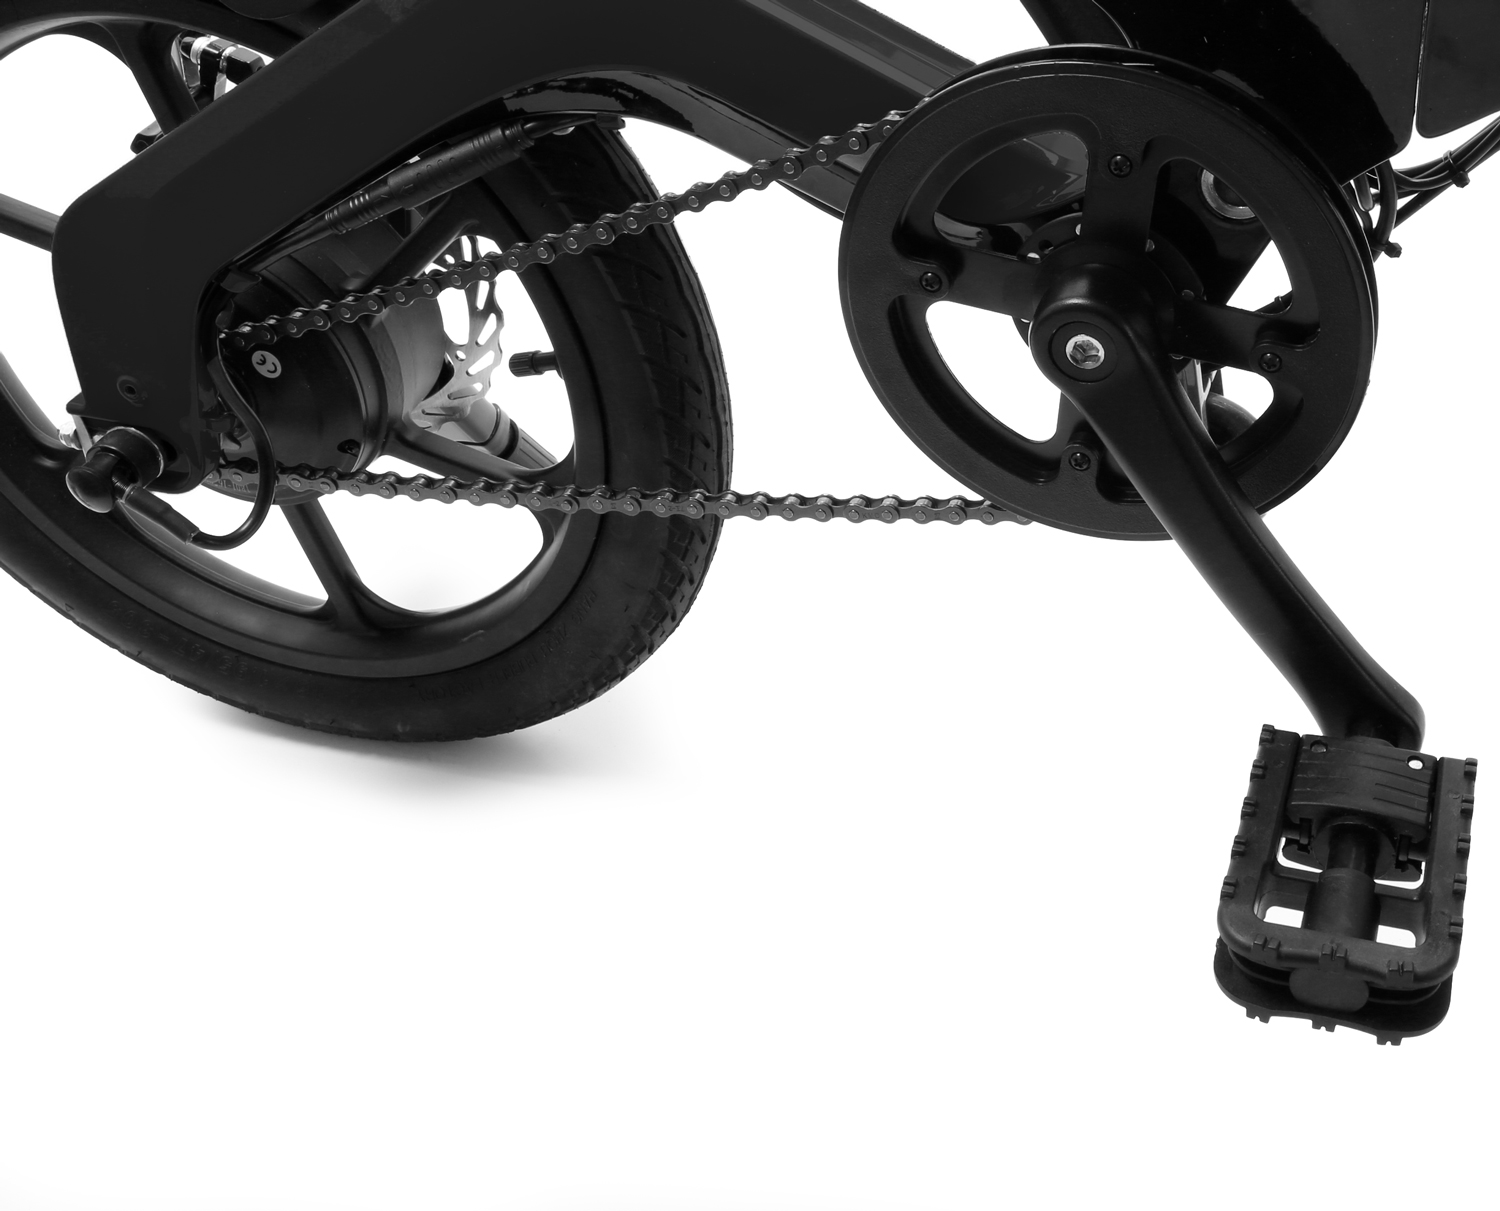 E-Bike SXT Velox, faltbares Pedelec mit Magnesiumrahmen